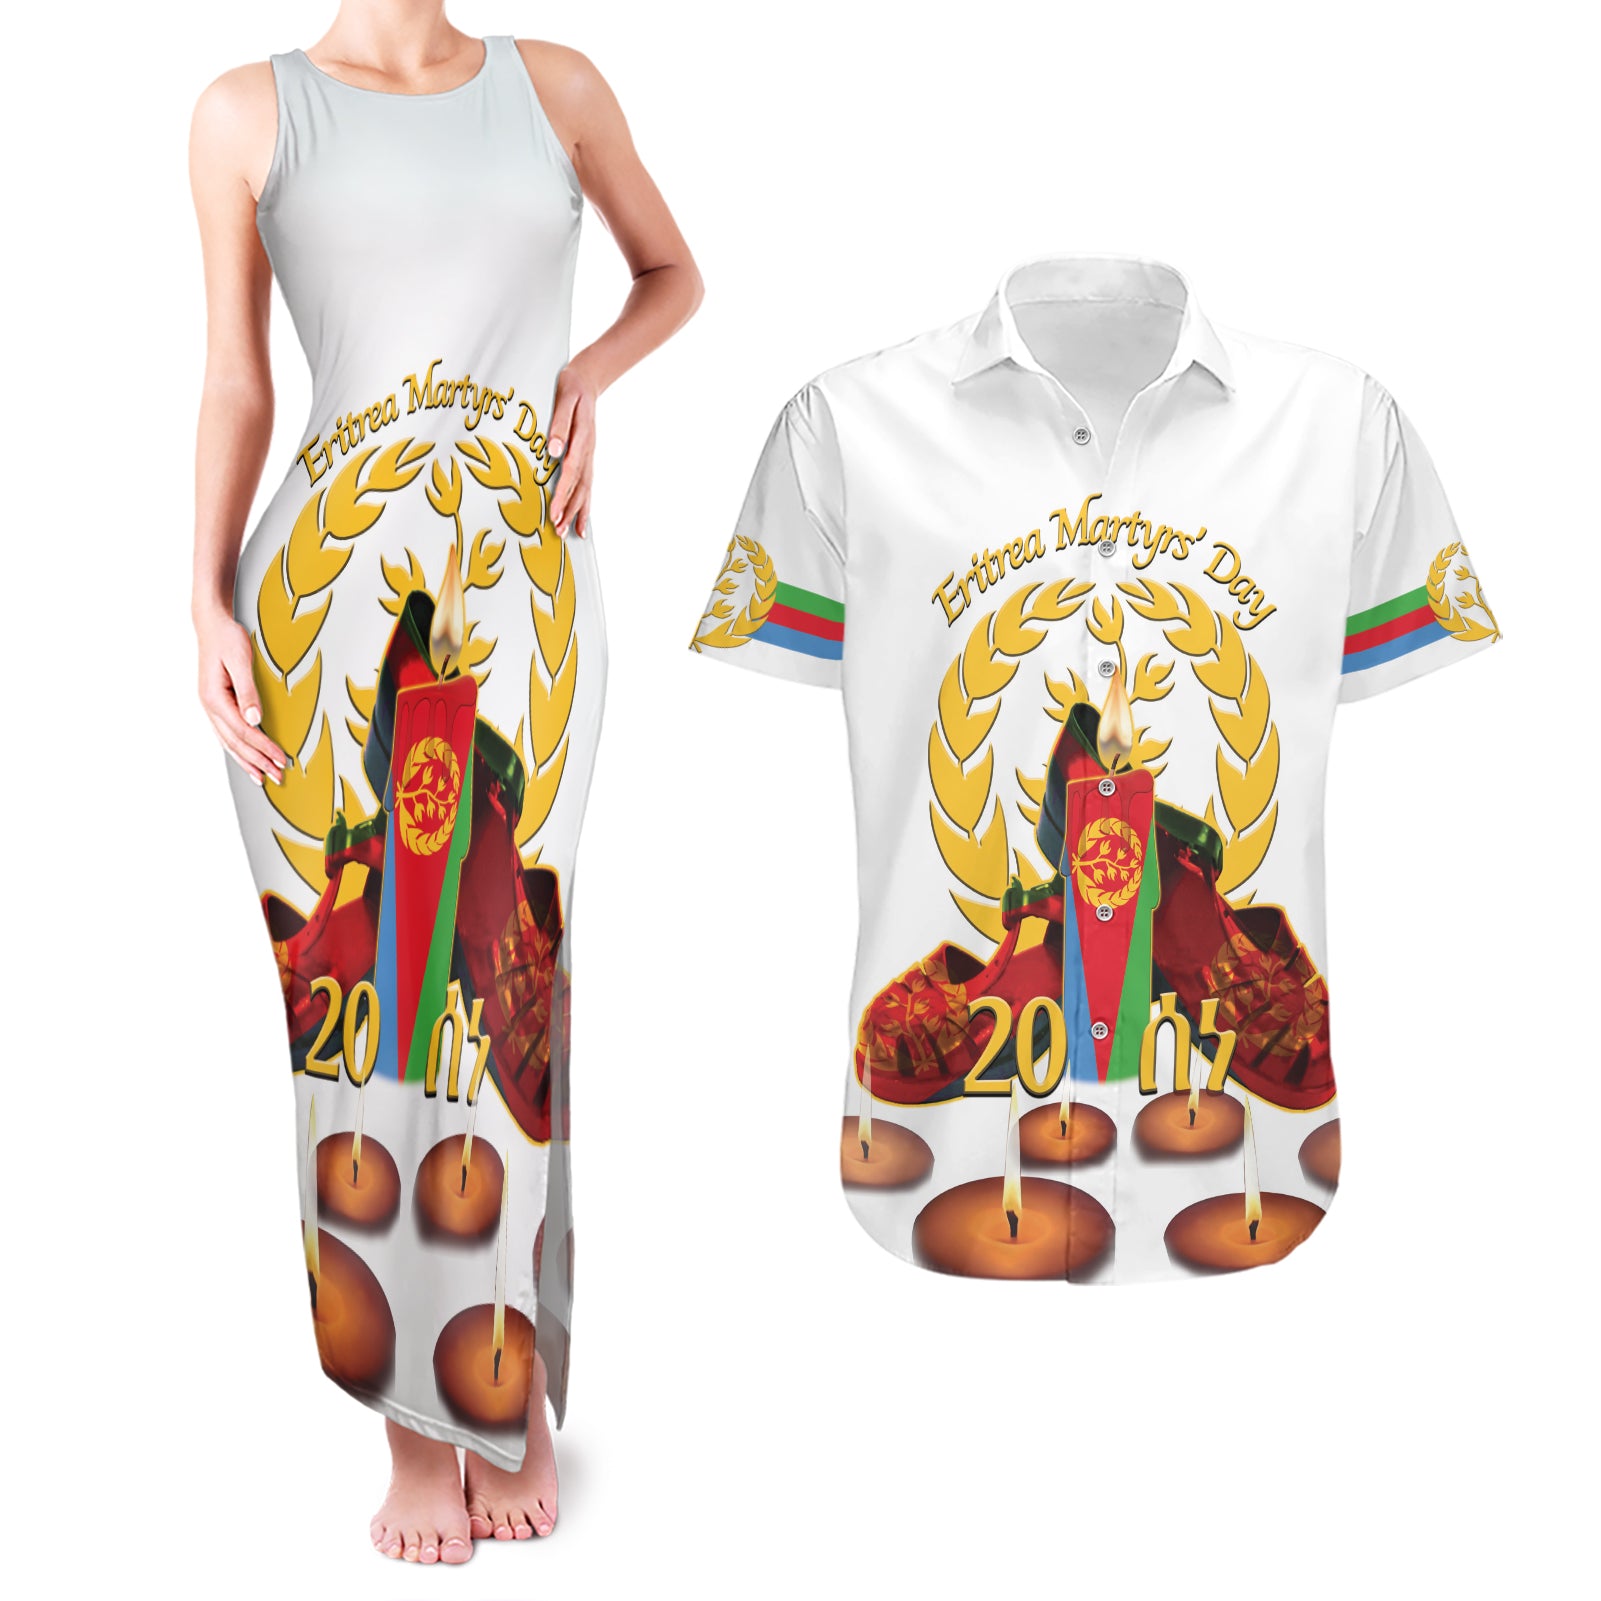 Custom Eritrea Martyrs' Day Couples Matching Tank Maxi Dress and Hawaiian Shirt 20 June Shida Shoes With Candles - White